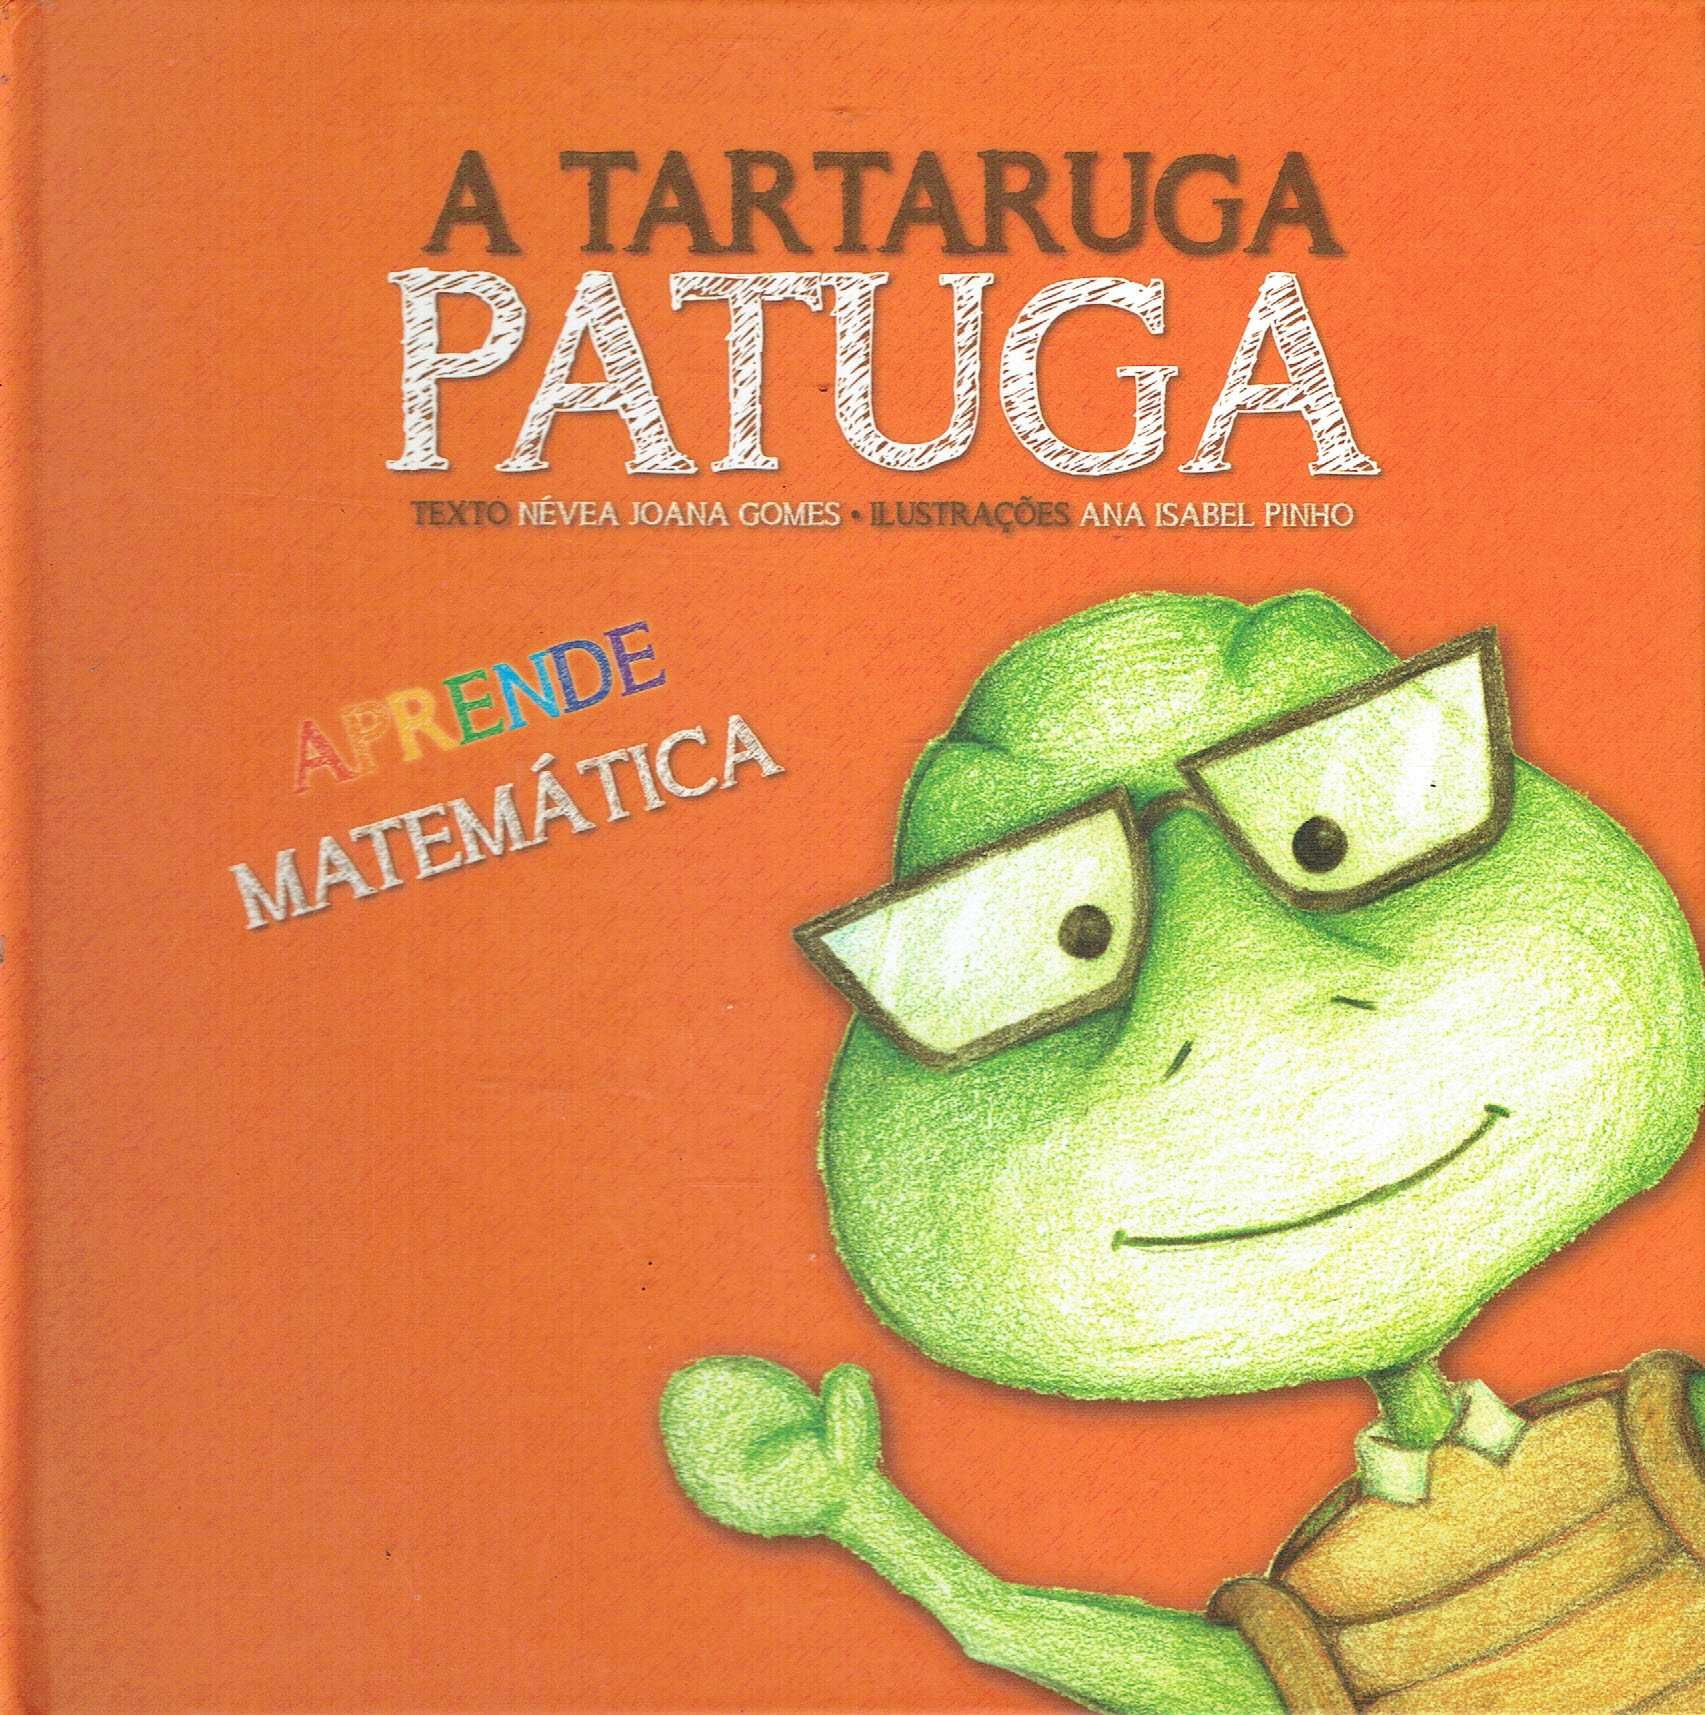 14640

A tartaruga Patuga : aprende matemática  
de Névea Joana Gomes